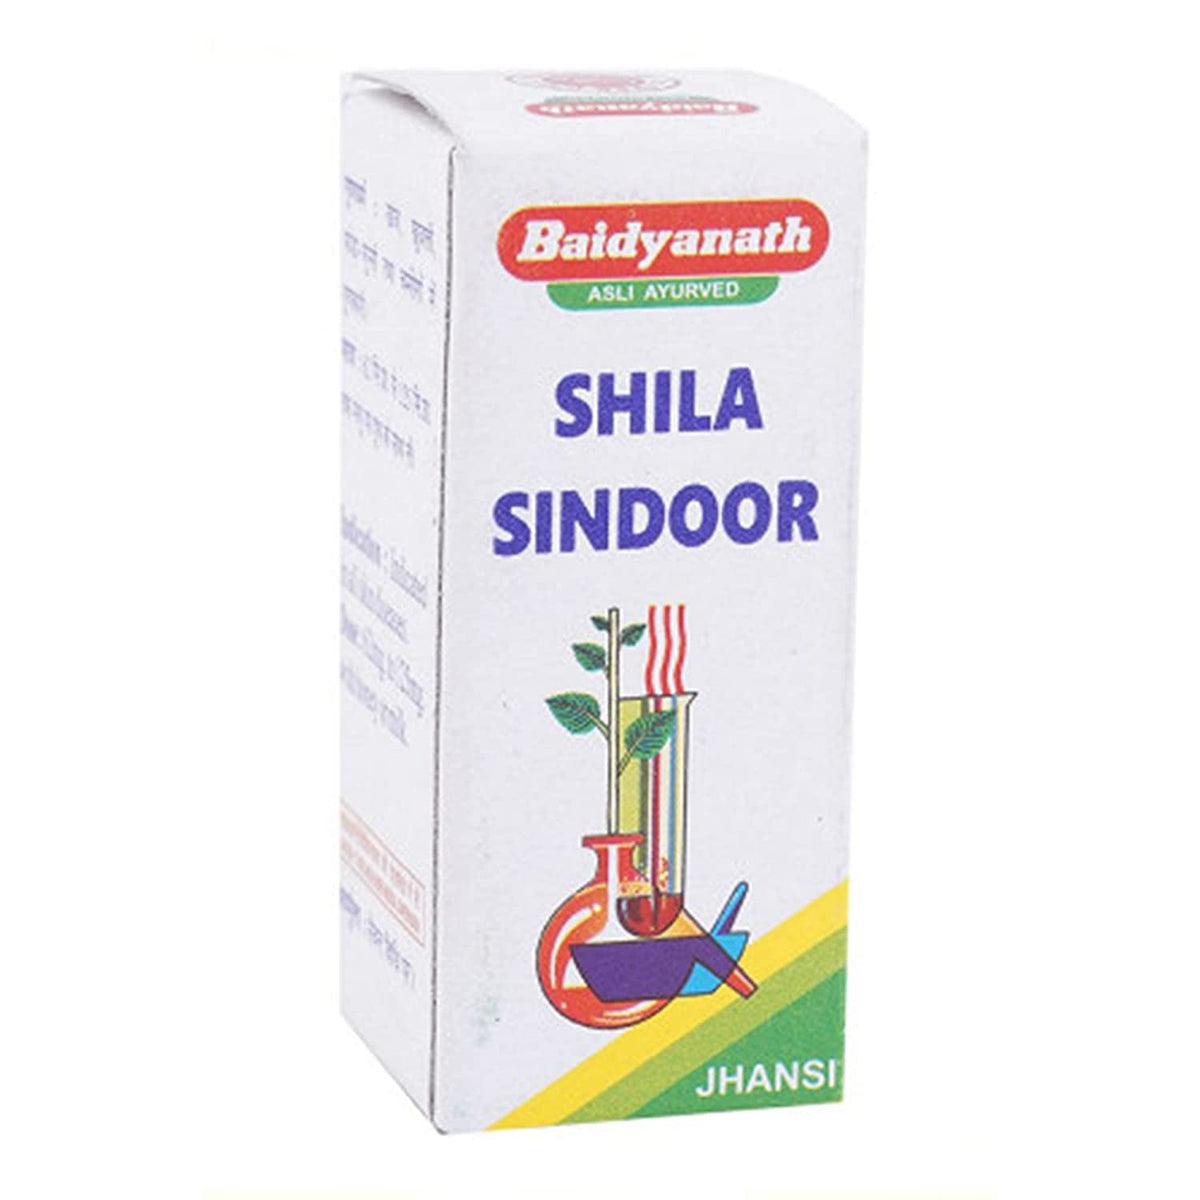 Baidyanath Ayurvedic (Jhansi) Shila Sindoor Powder 2.5gm